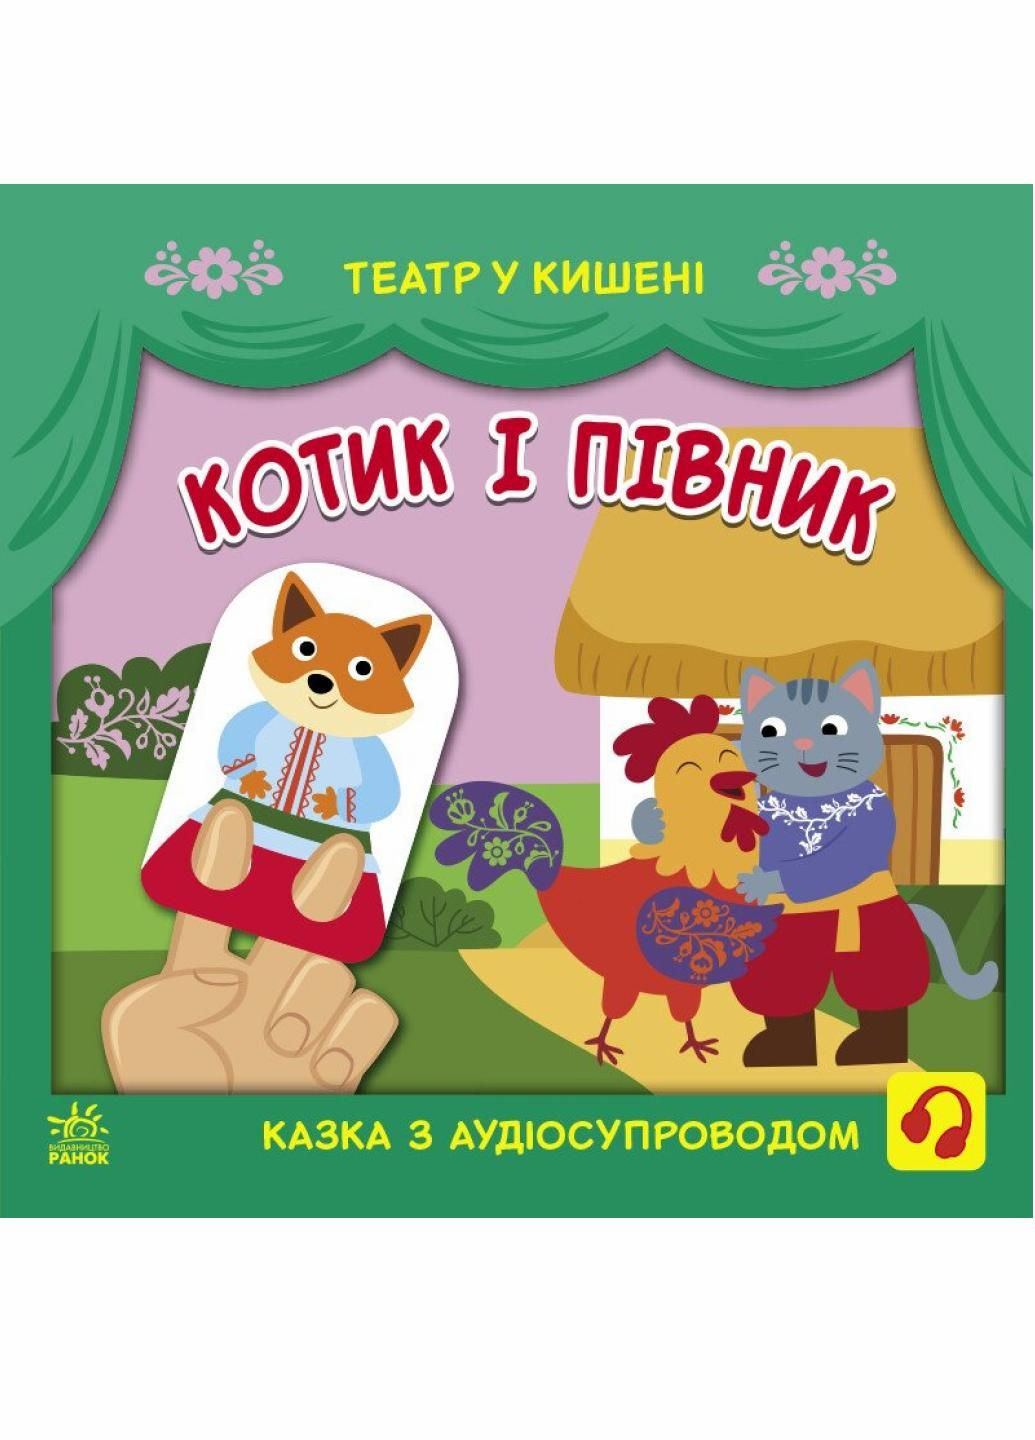 Книга Театр в кармане: Котик и петушок. Автор Моисеенко С. G1719003У 9786170980748 РАНОК (293343353)